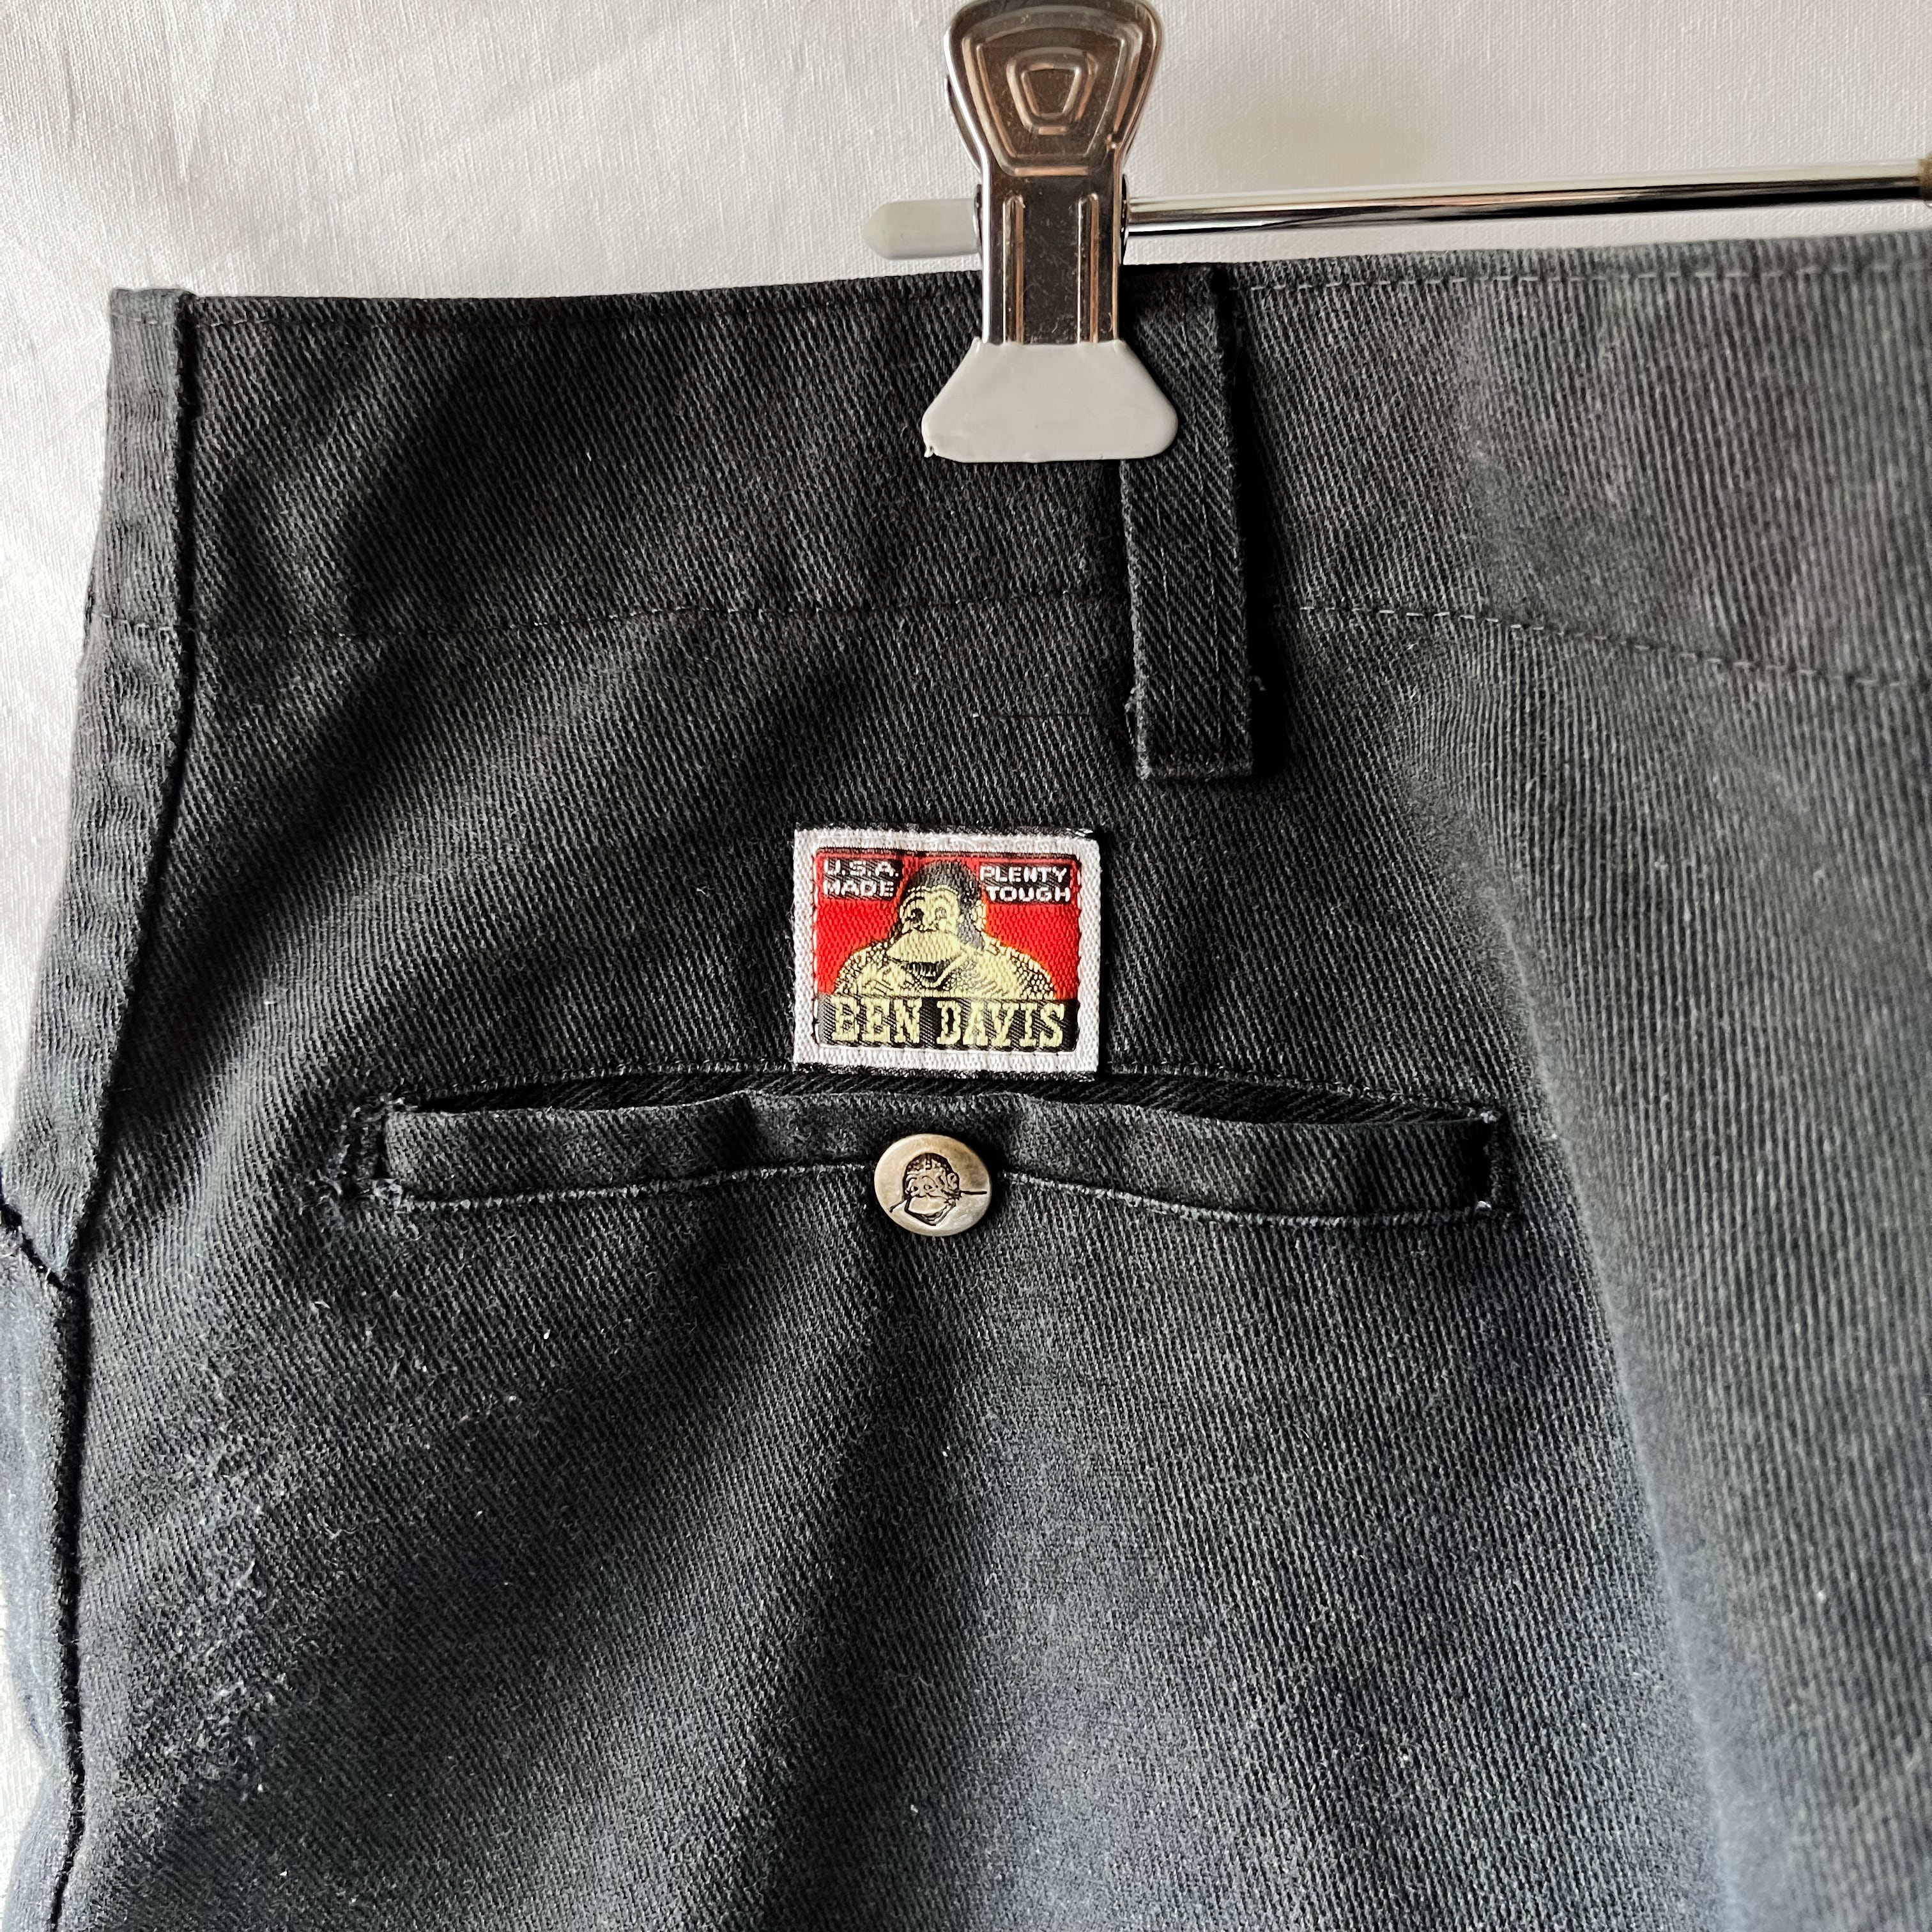 90s “Ben davis” made in usa big size cut off black pants 90年代